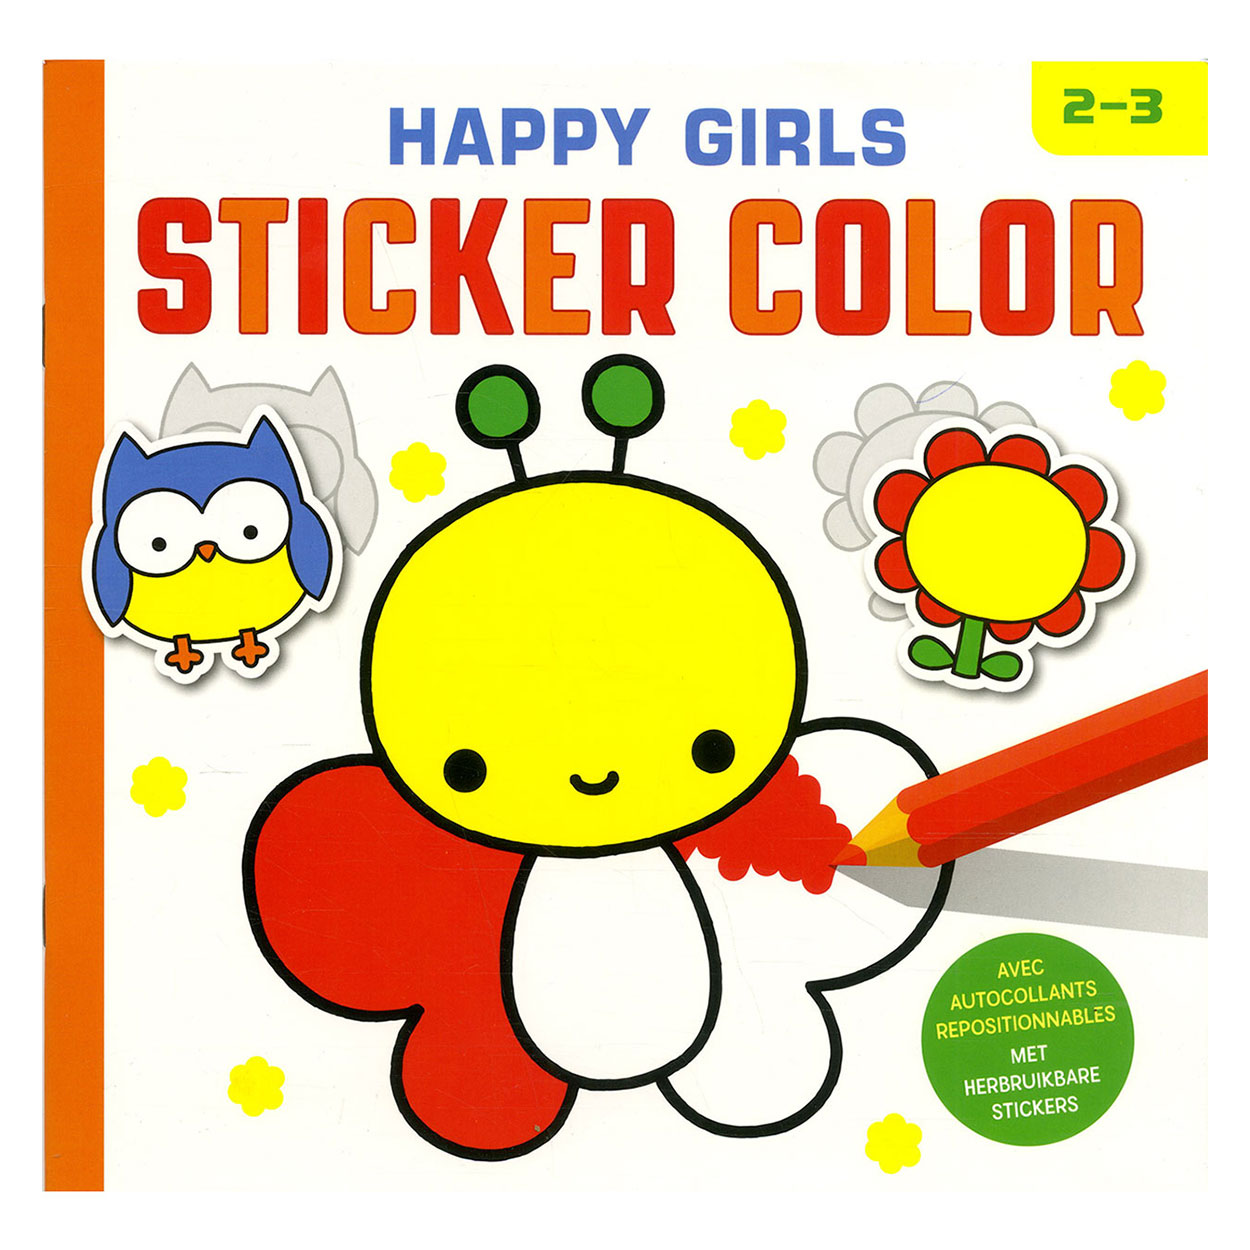 Happy Girls Sticker Color